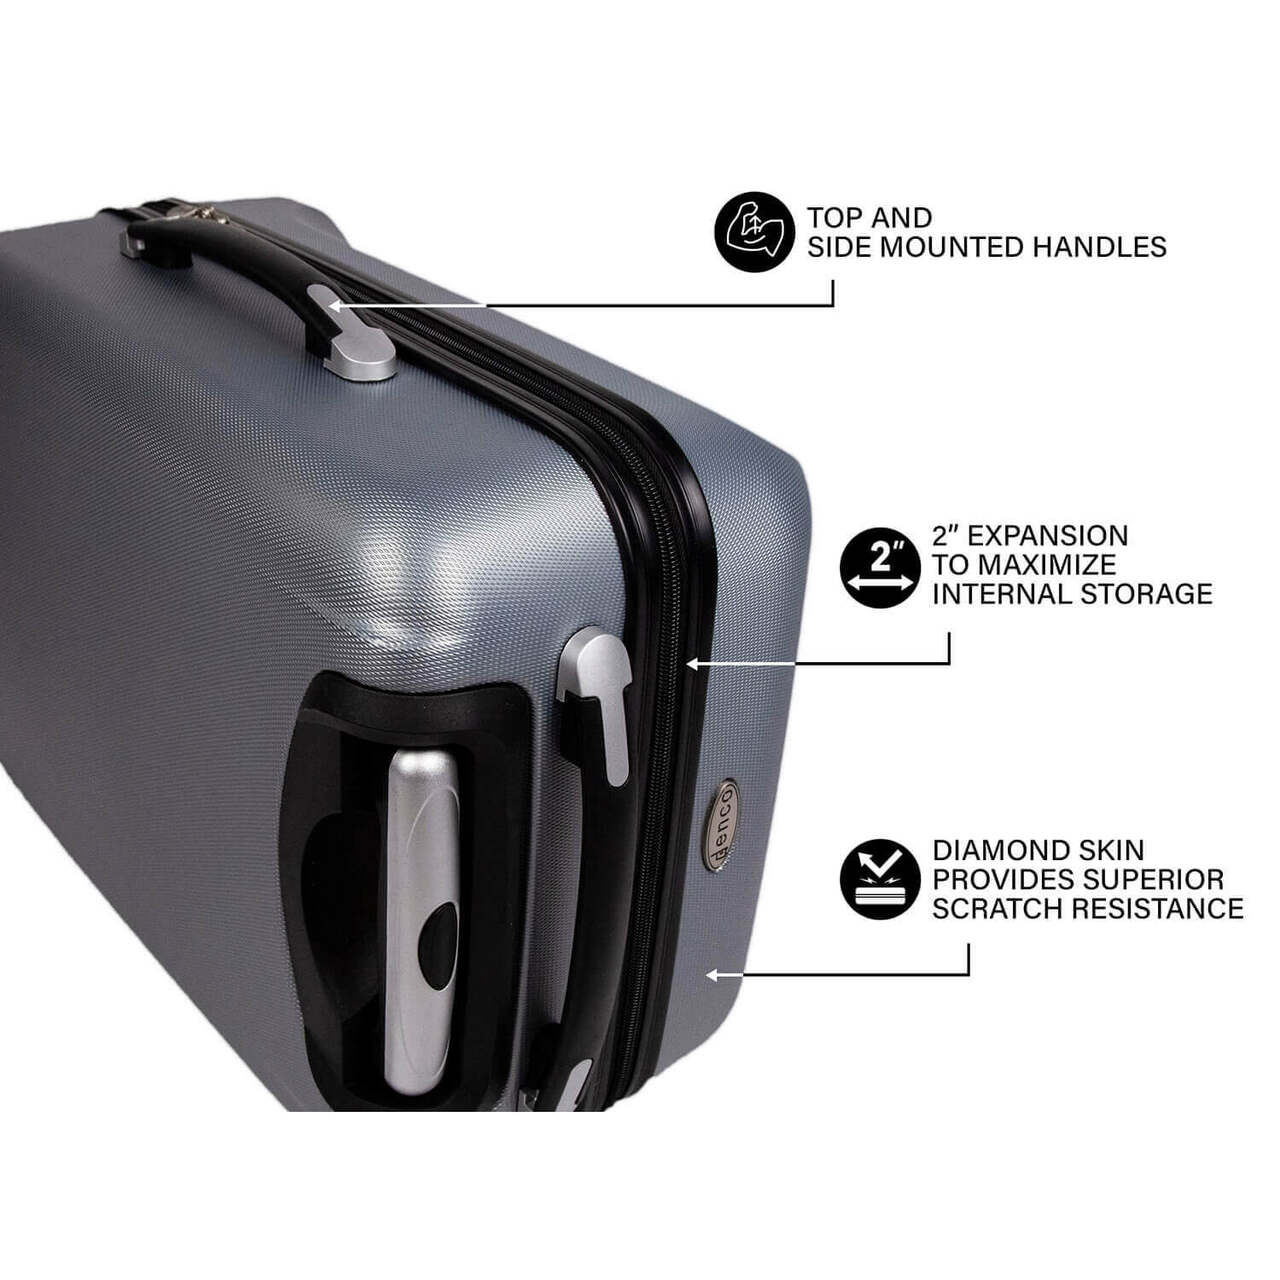 Berkeley 20" Hardcase Luggage Carry-on Spinner